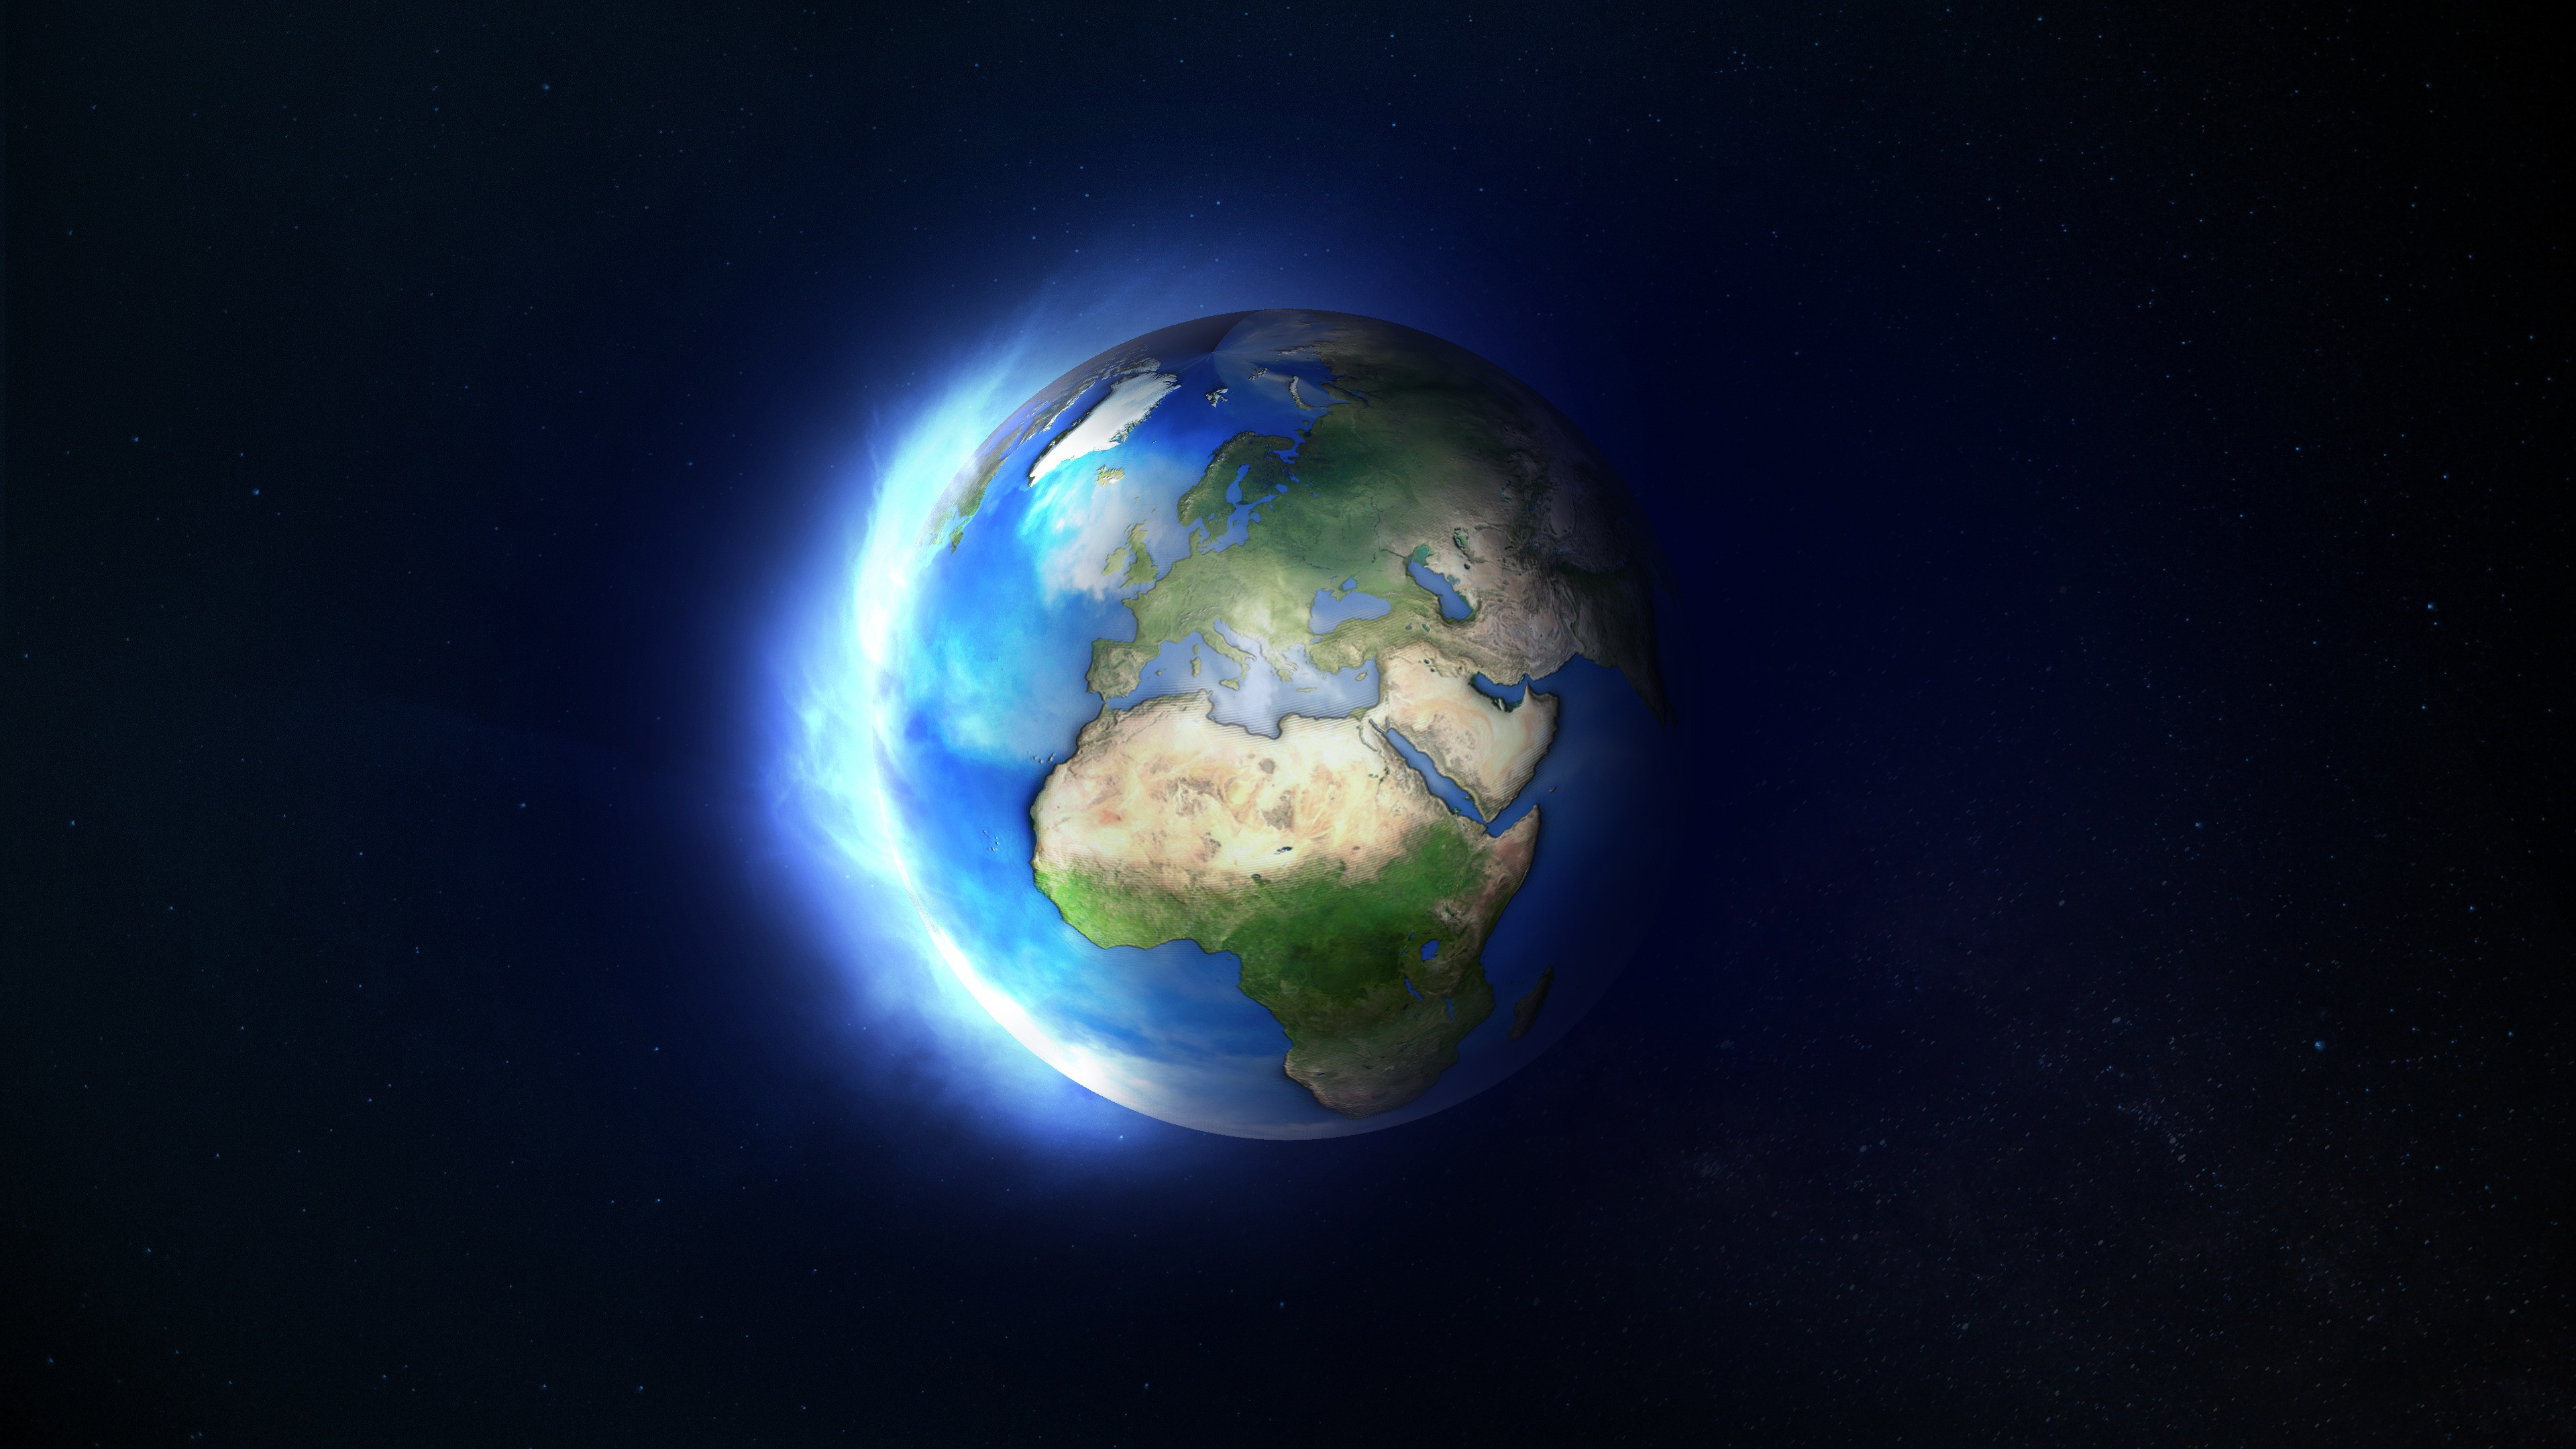 Fondos de pantalla Planet Earth animated cartoon style